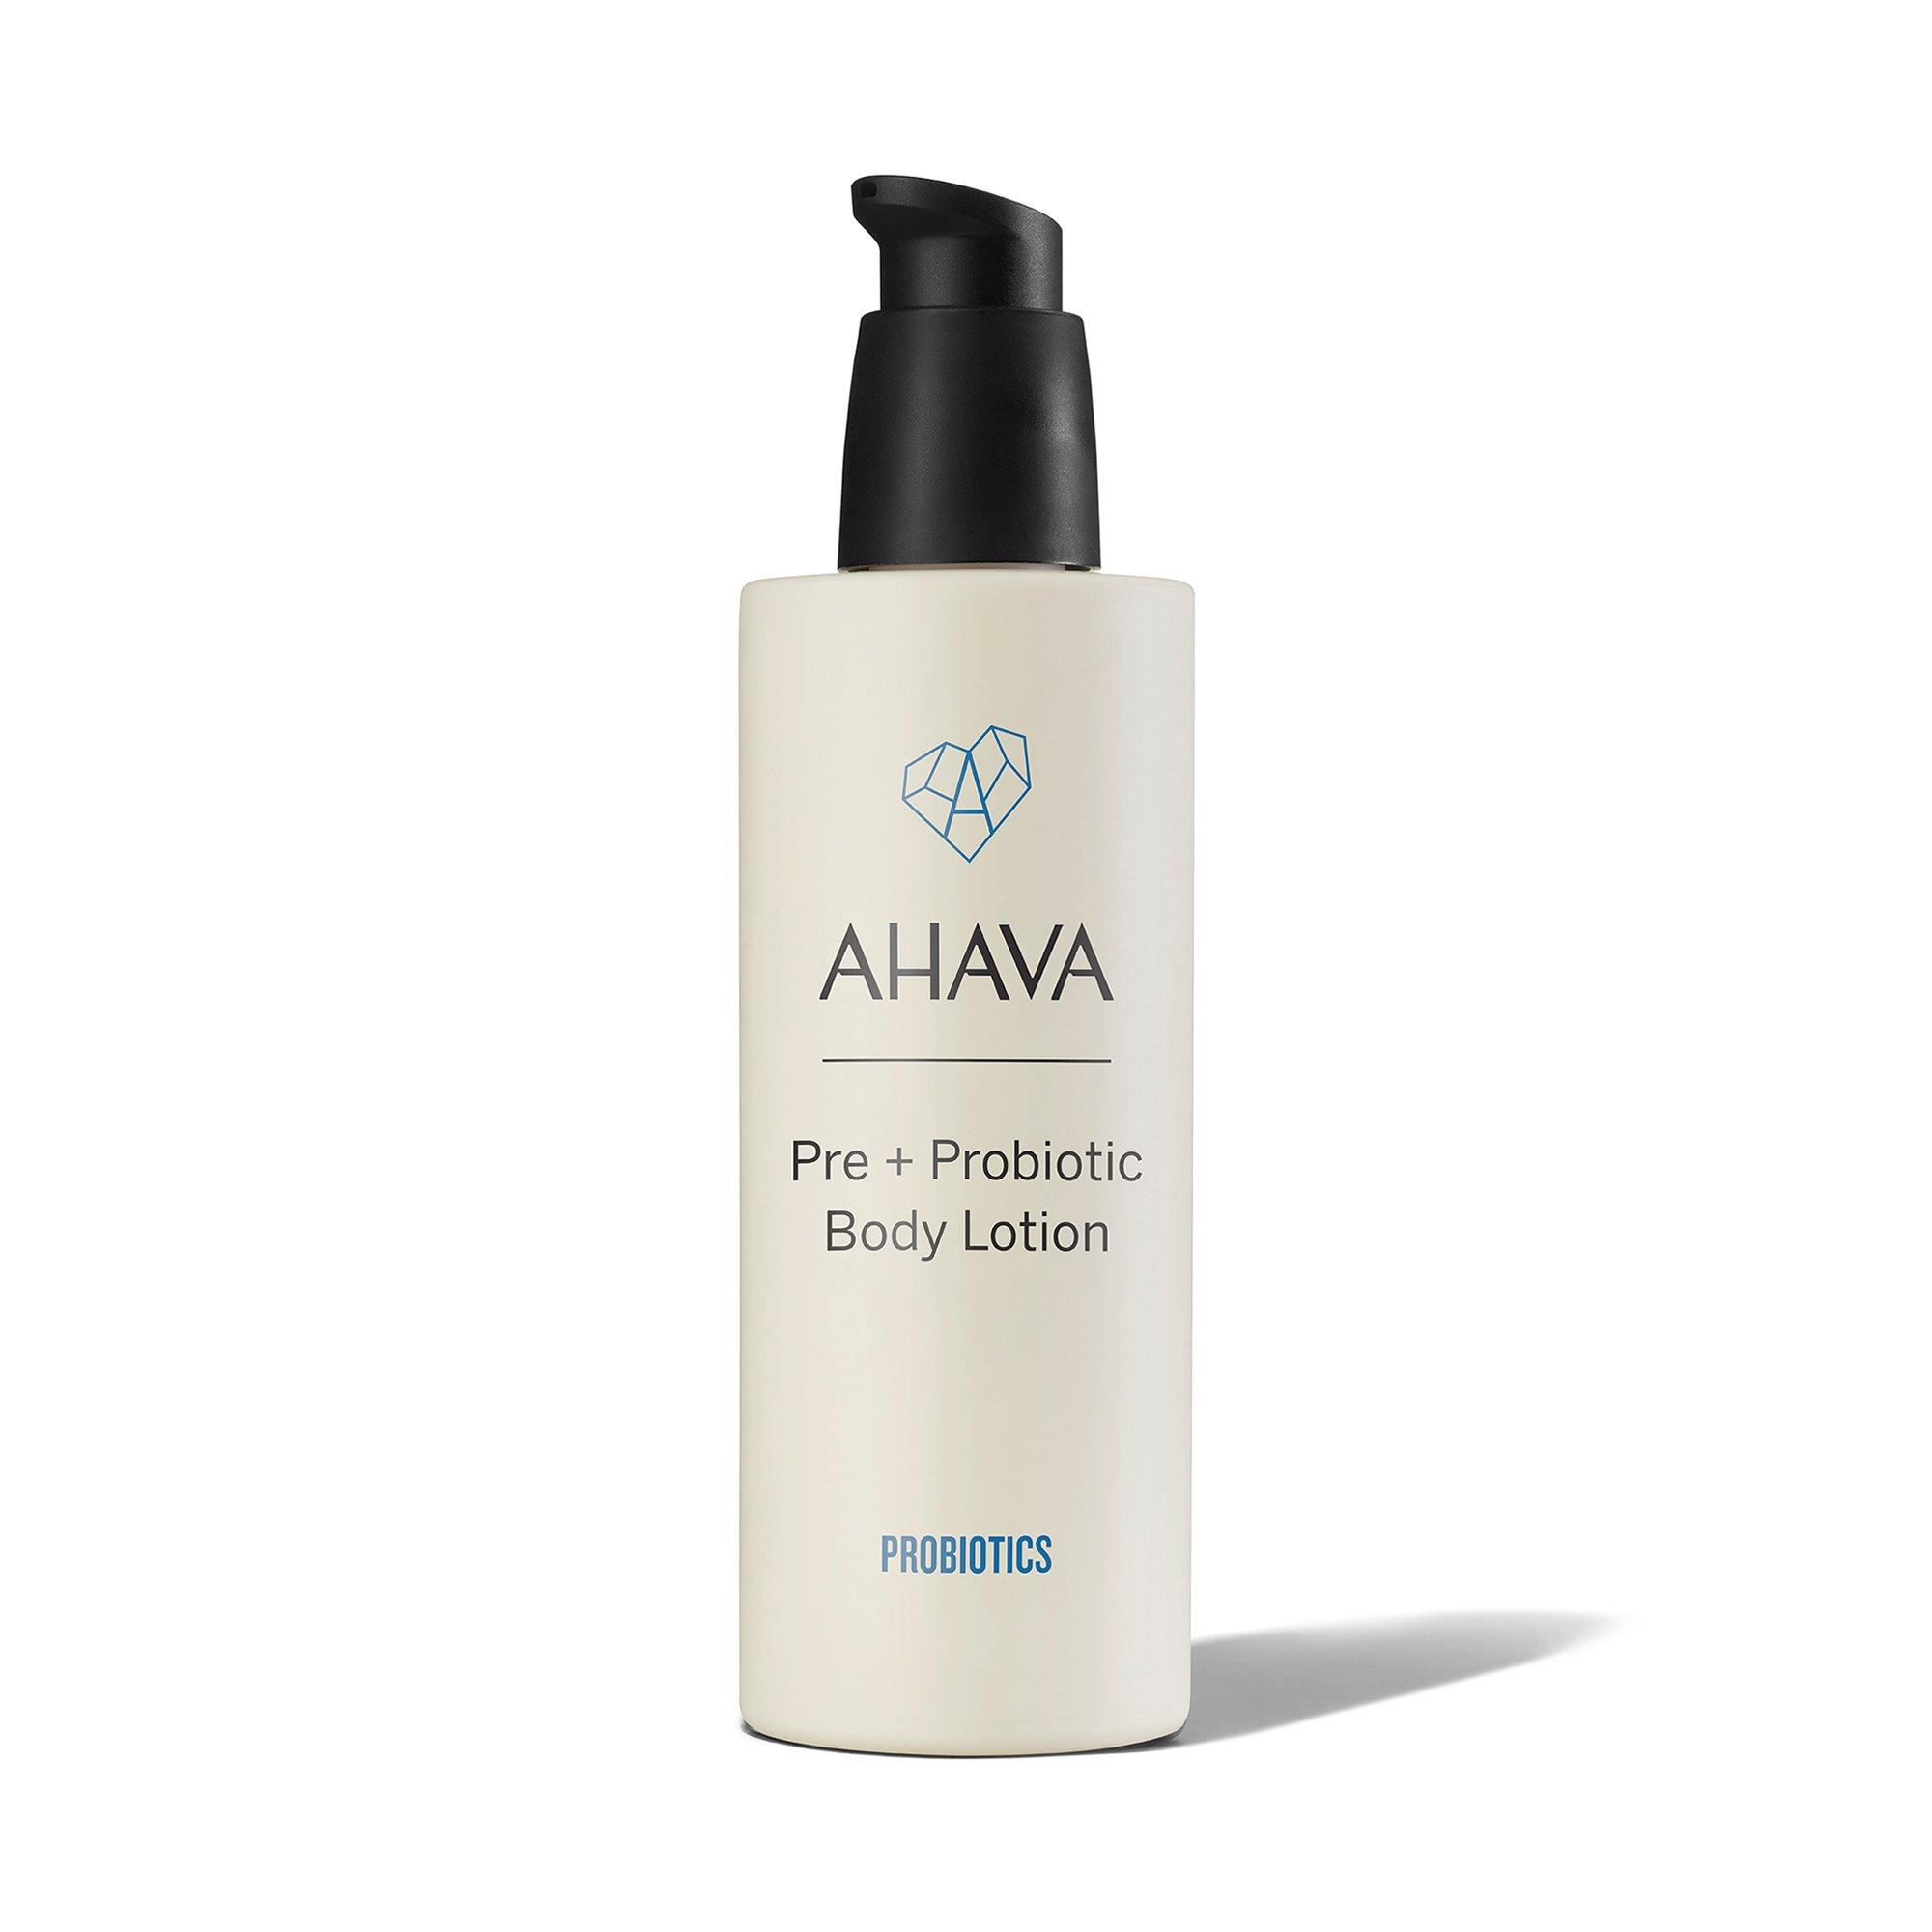 Image of AHAVA Pre + Probiotic Body Lotion - 250ml